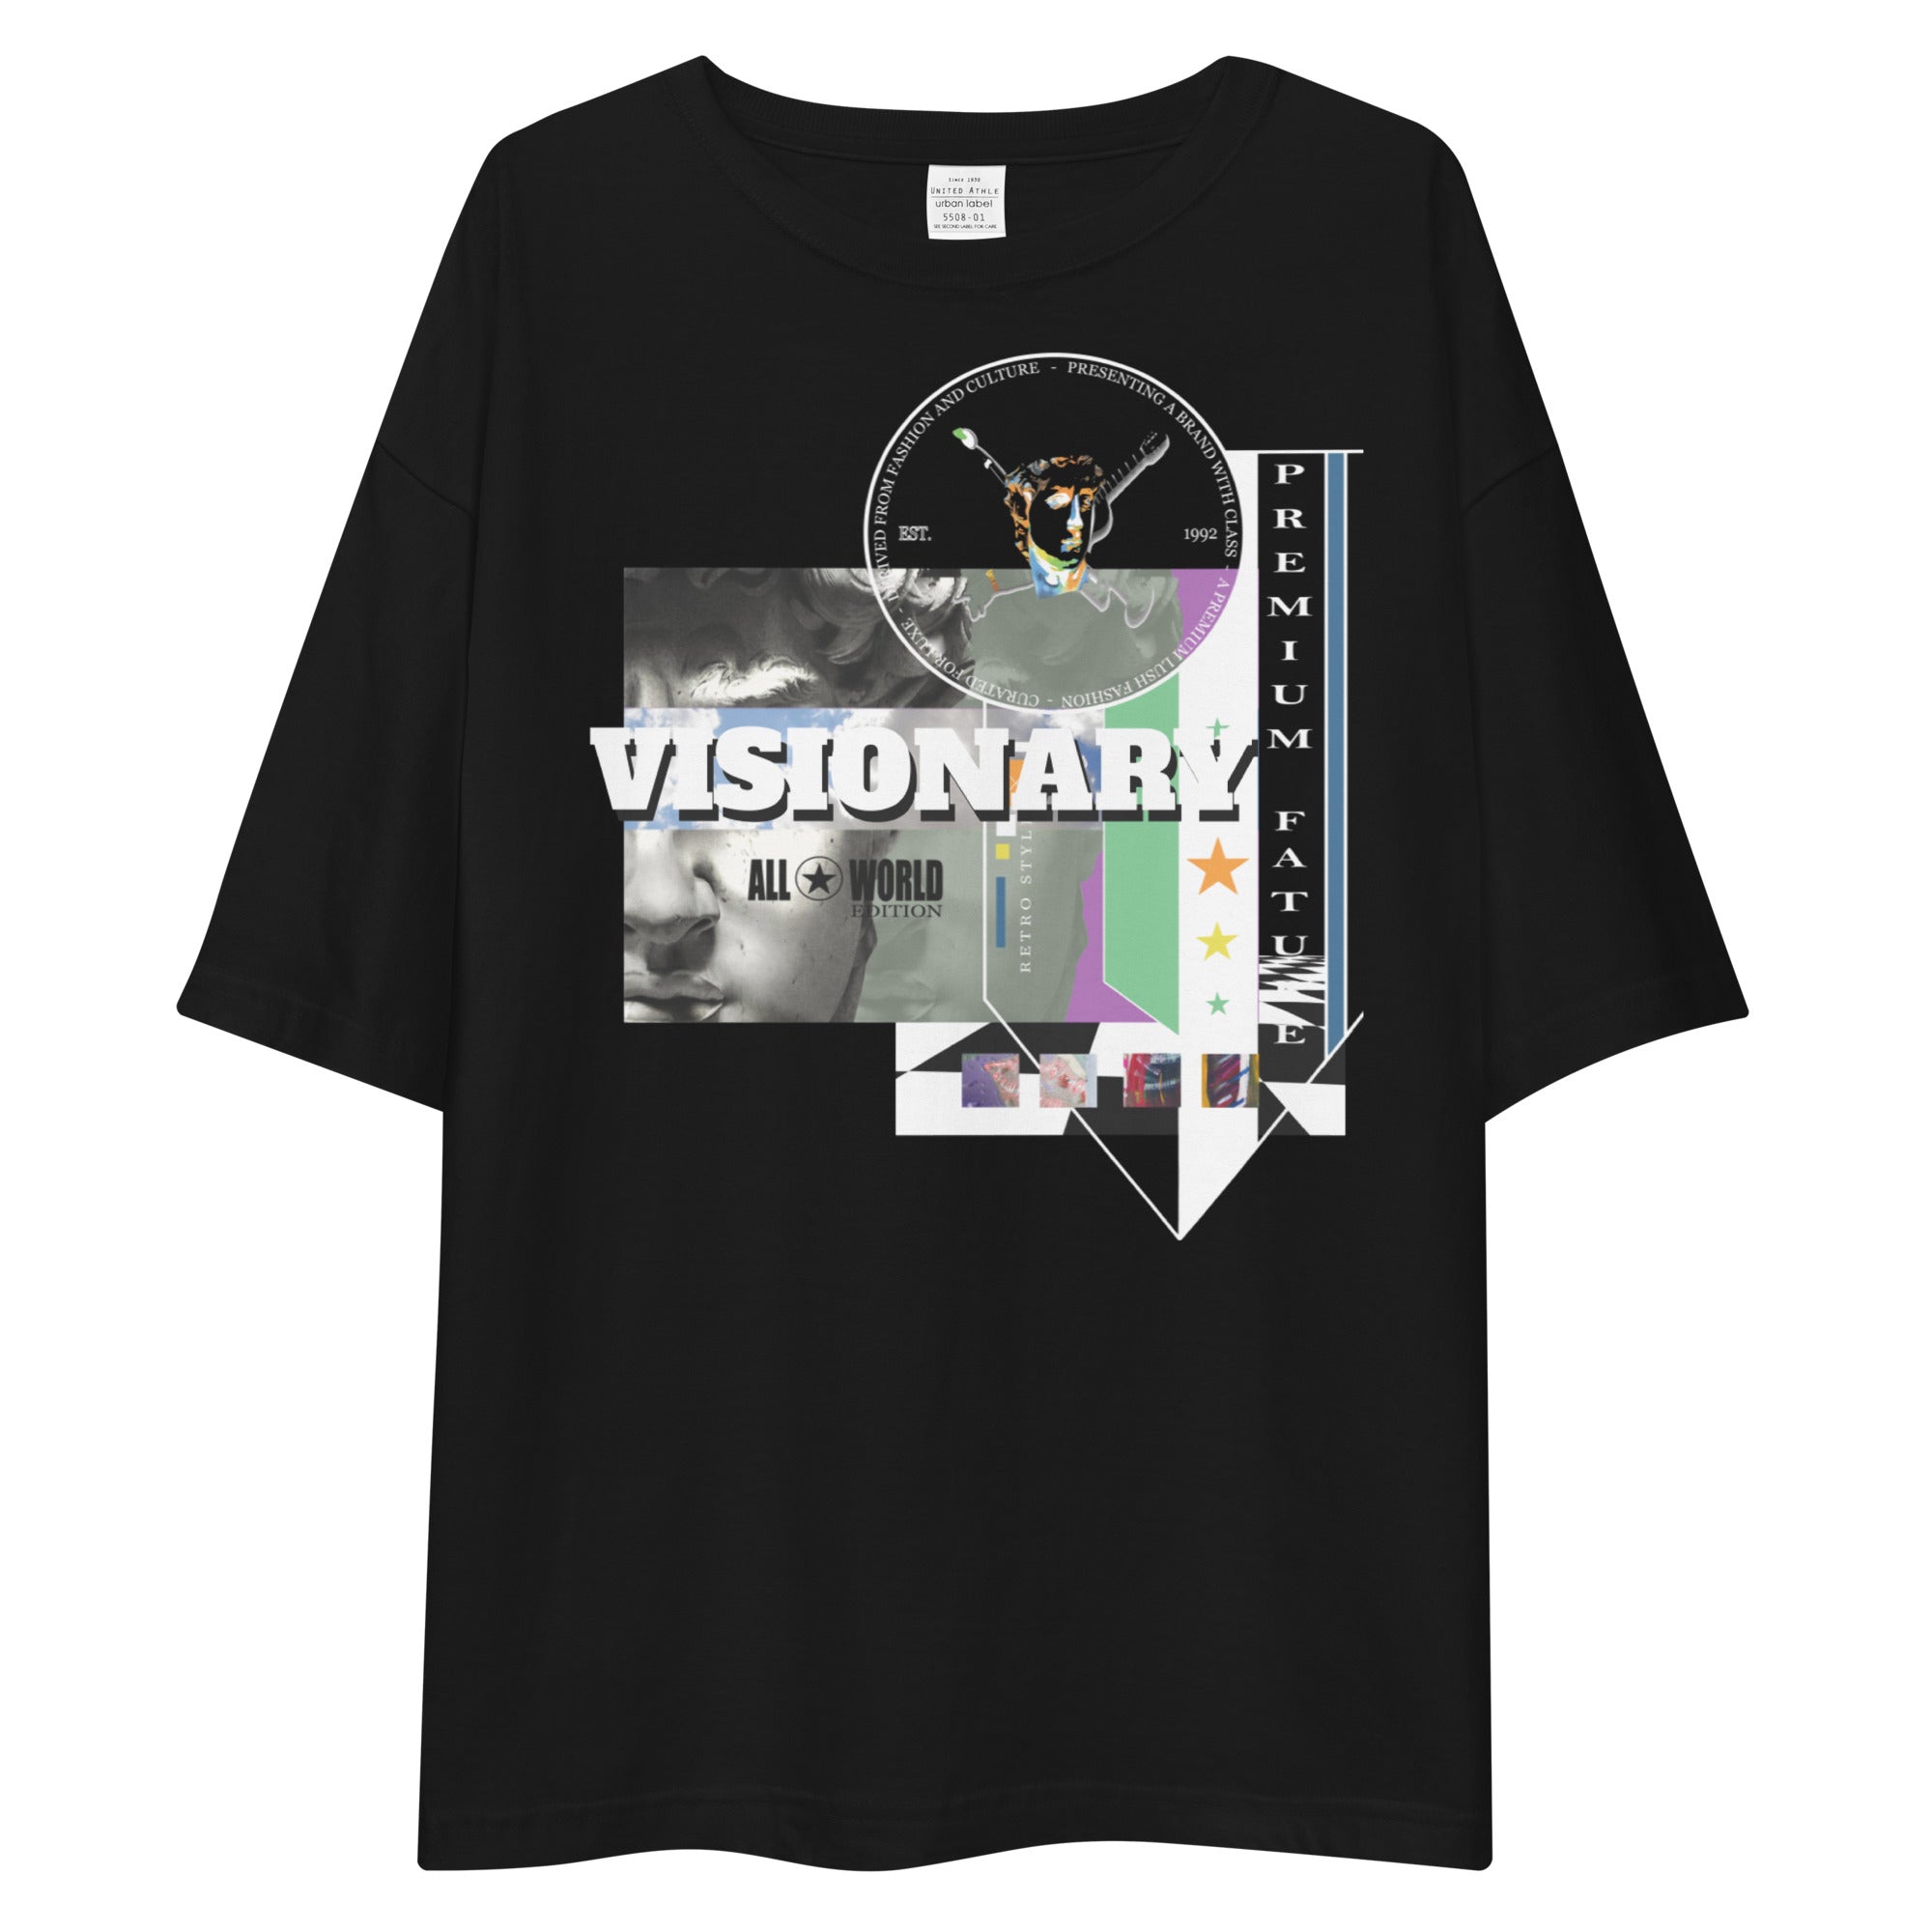 David Fature "Visionary" All-World Edition premium oversized t-shirt - PREMIUM FATURE